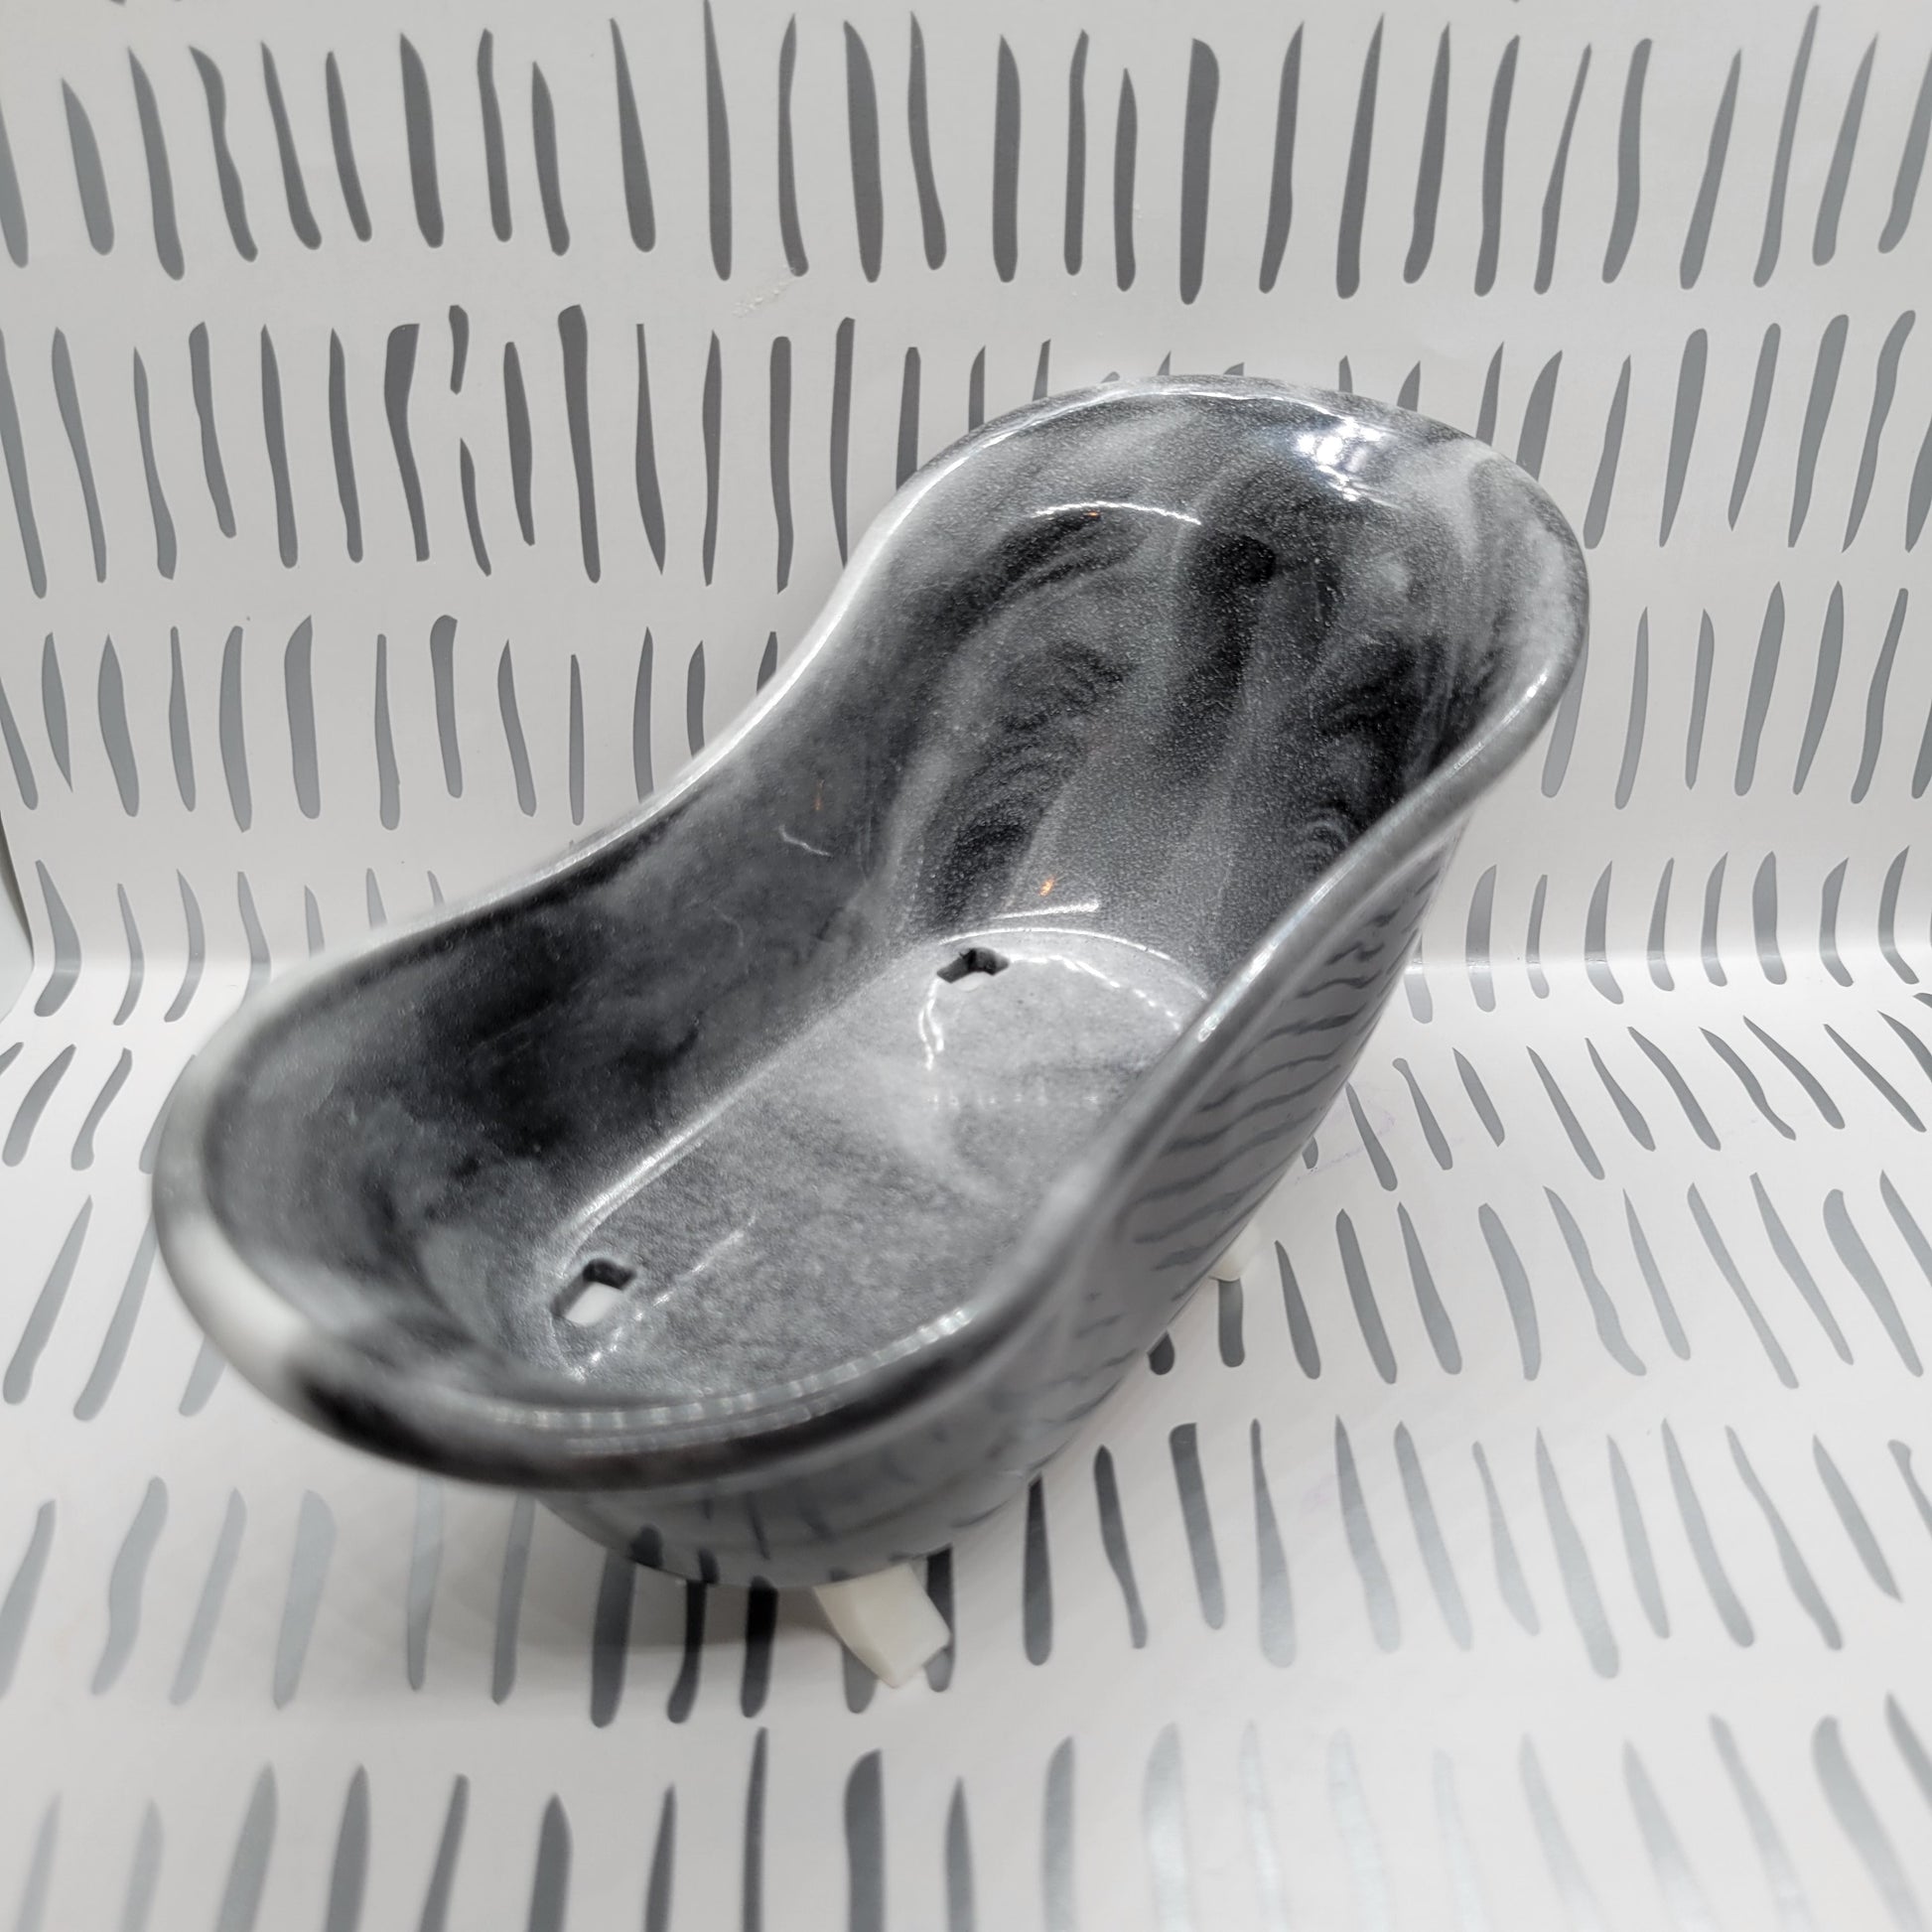 Clawfoot Tub Cast Iron Soap Dish - Bathroom Accessories - Soap Holders